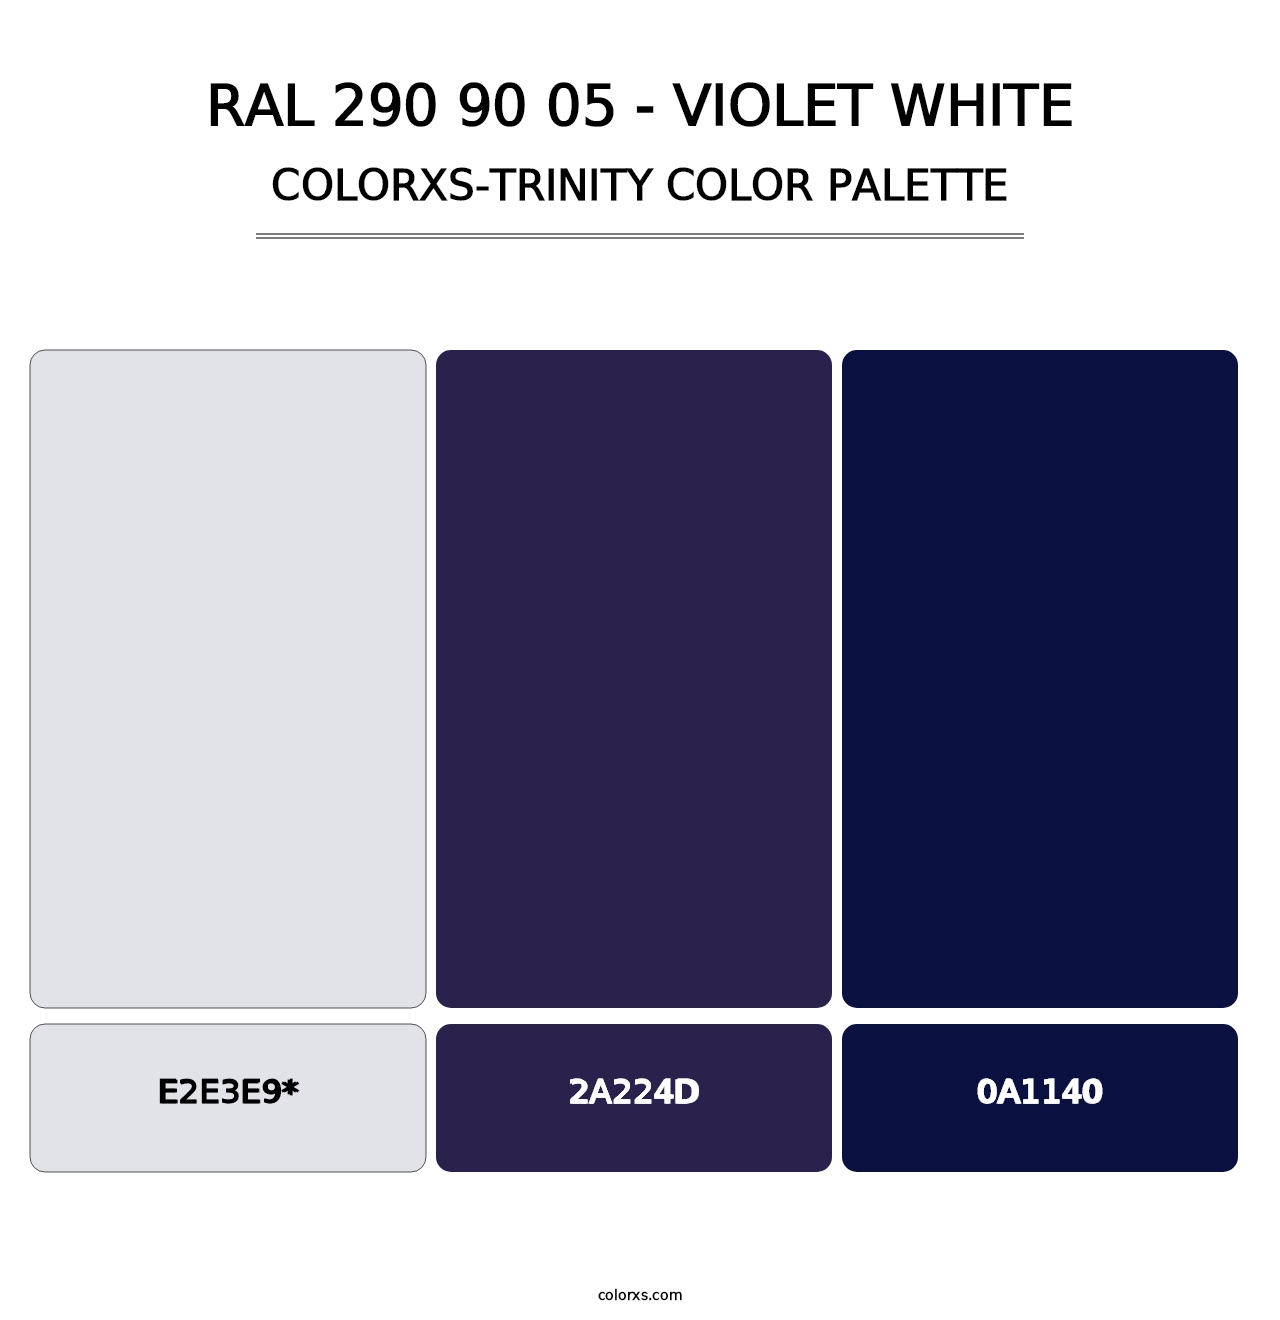 RAL 290 90 05 - Violet White - Colorxs Trinity Palette